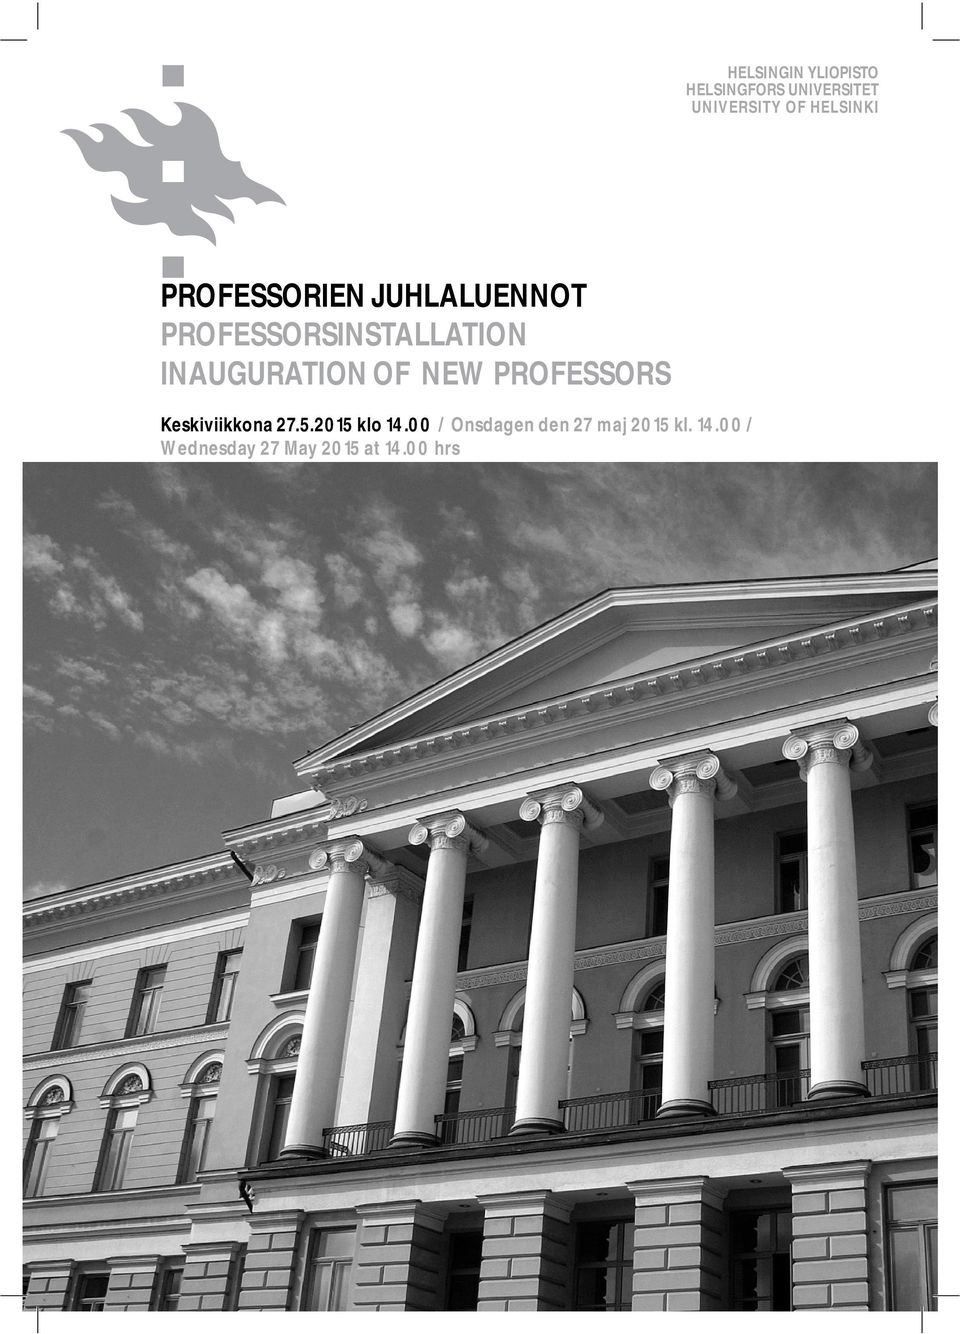 INAUGURATION OF NEW PROFESSORS Keskiviikkona 27.5.2015 klo 14.